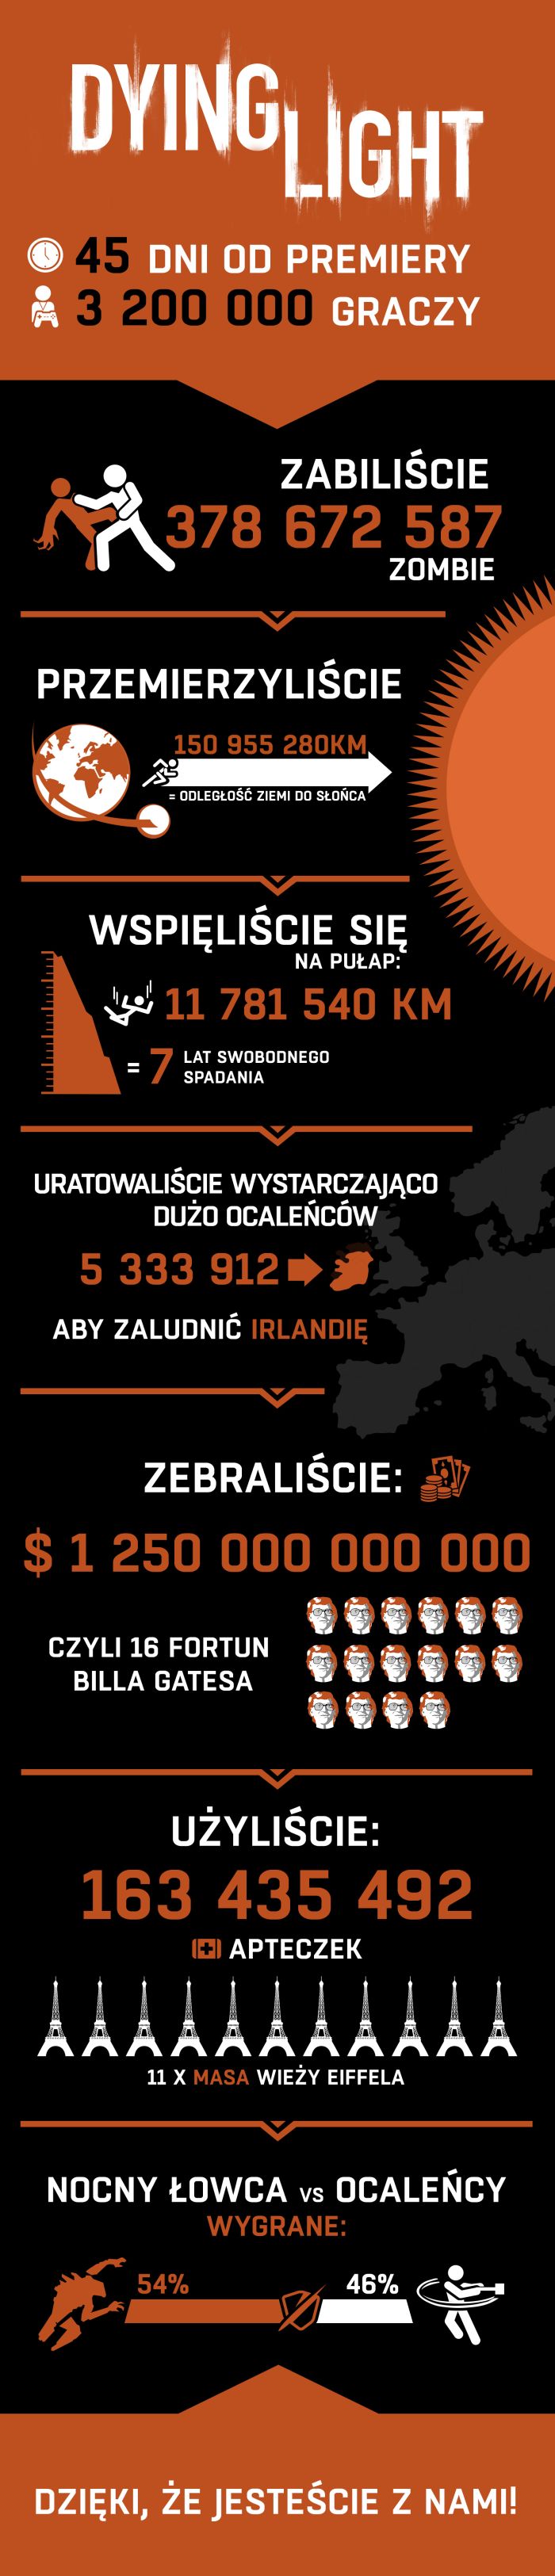 DL-infographic-pl